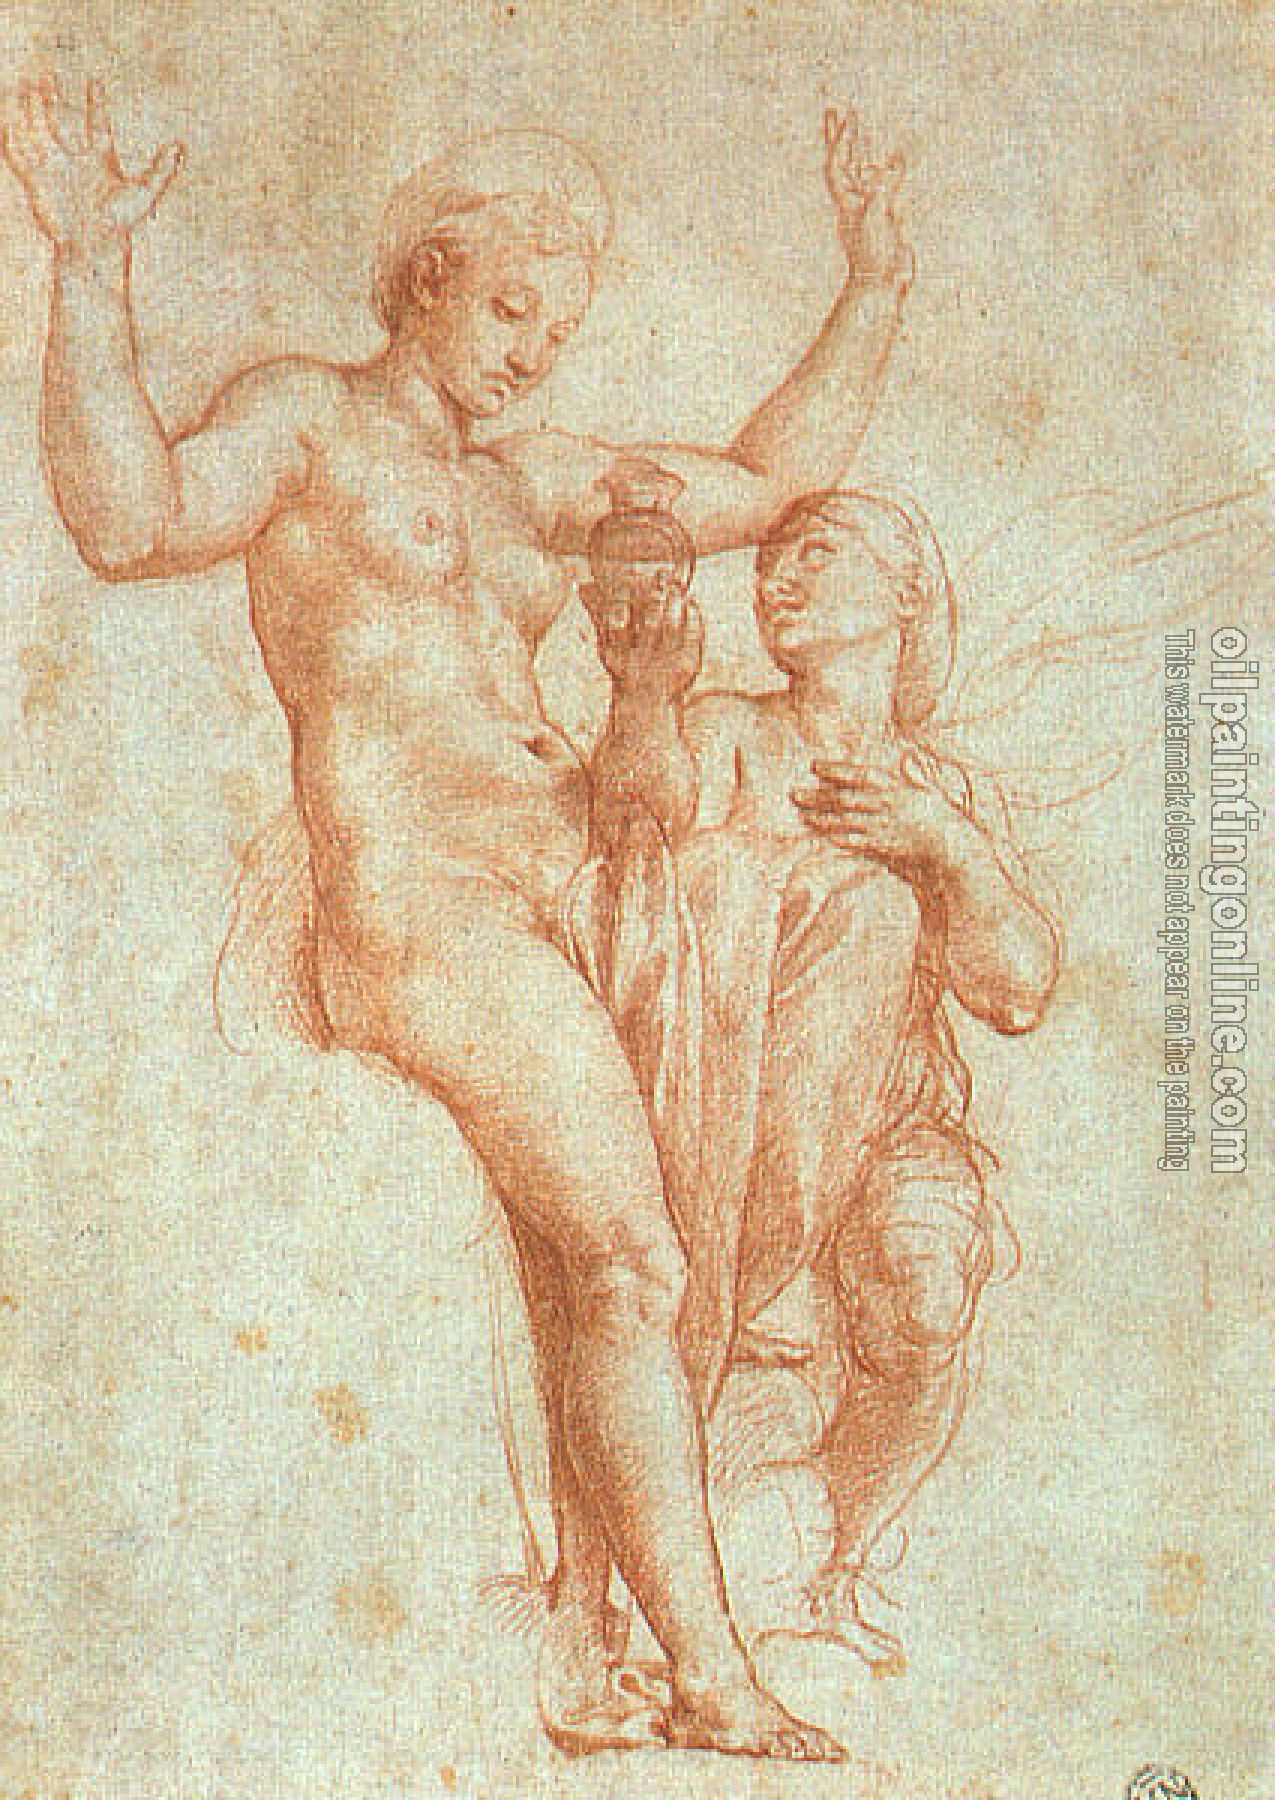 Raphael - Oil Painting